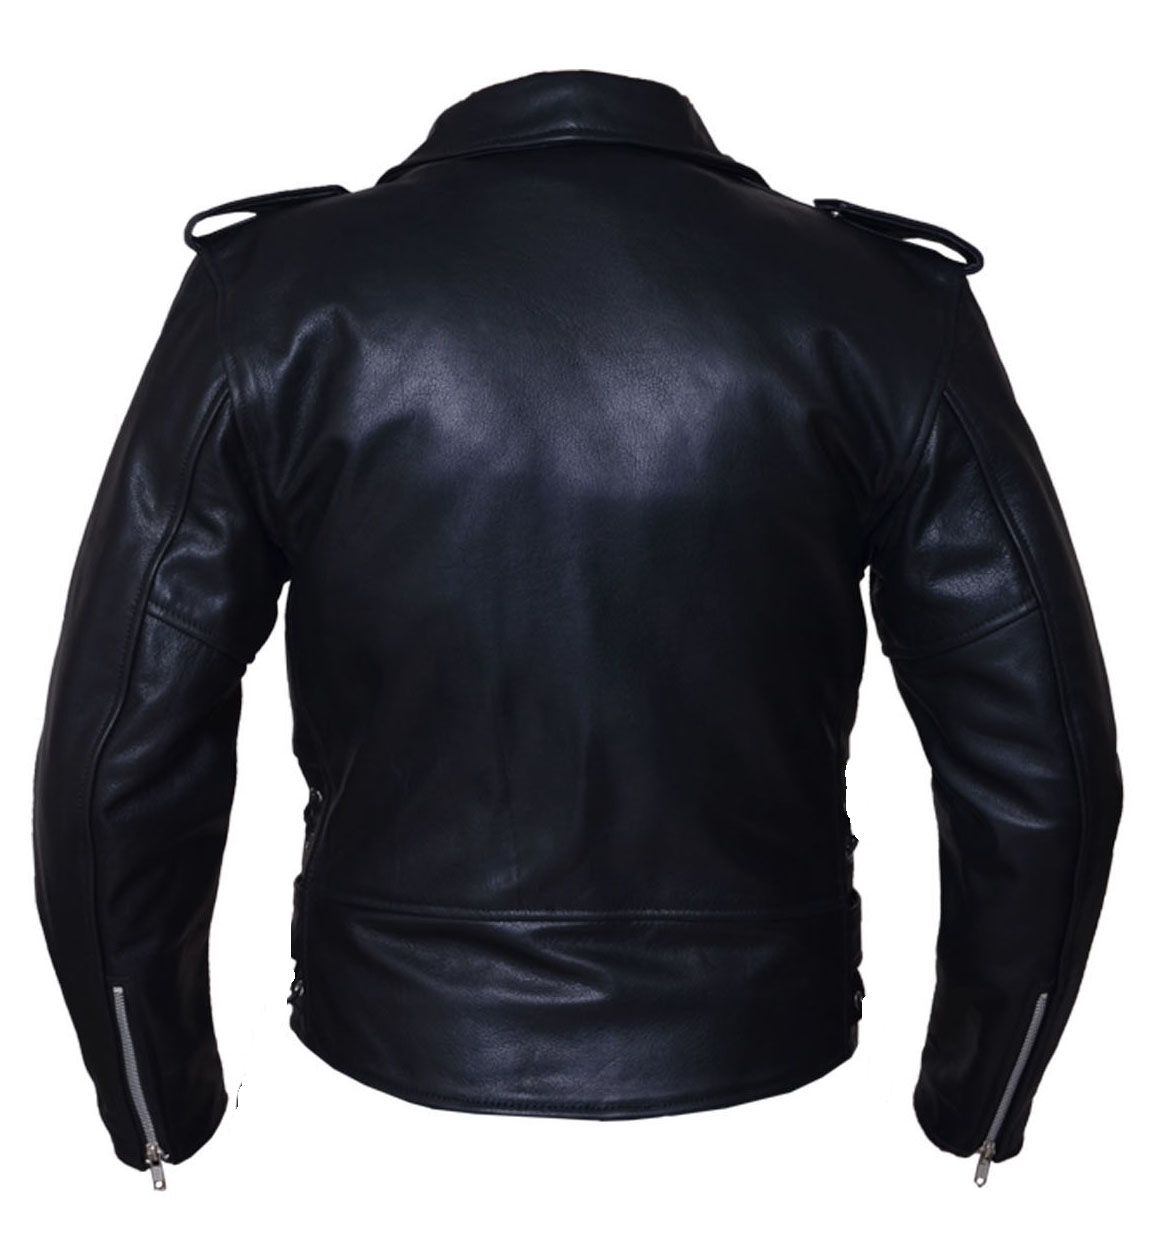 Premium Womens Motorcycle Jacket by Unik Leather